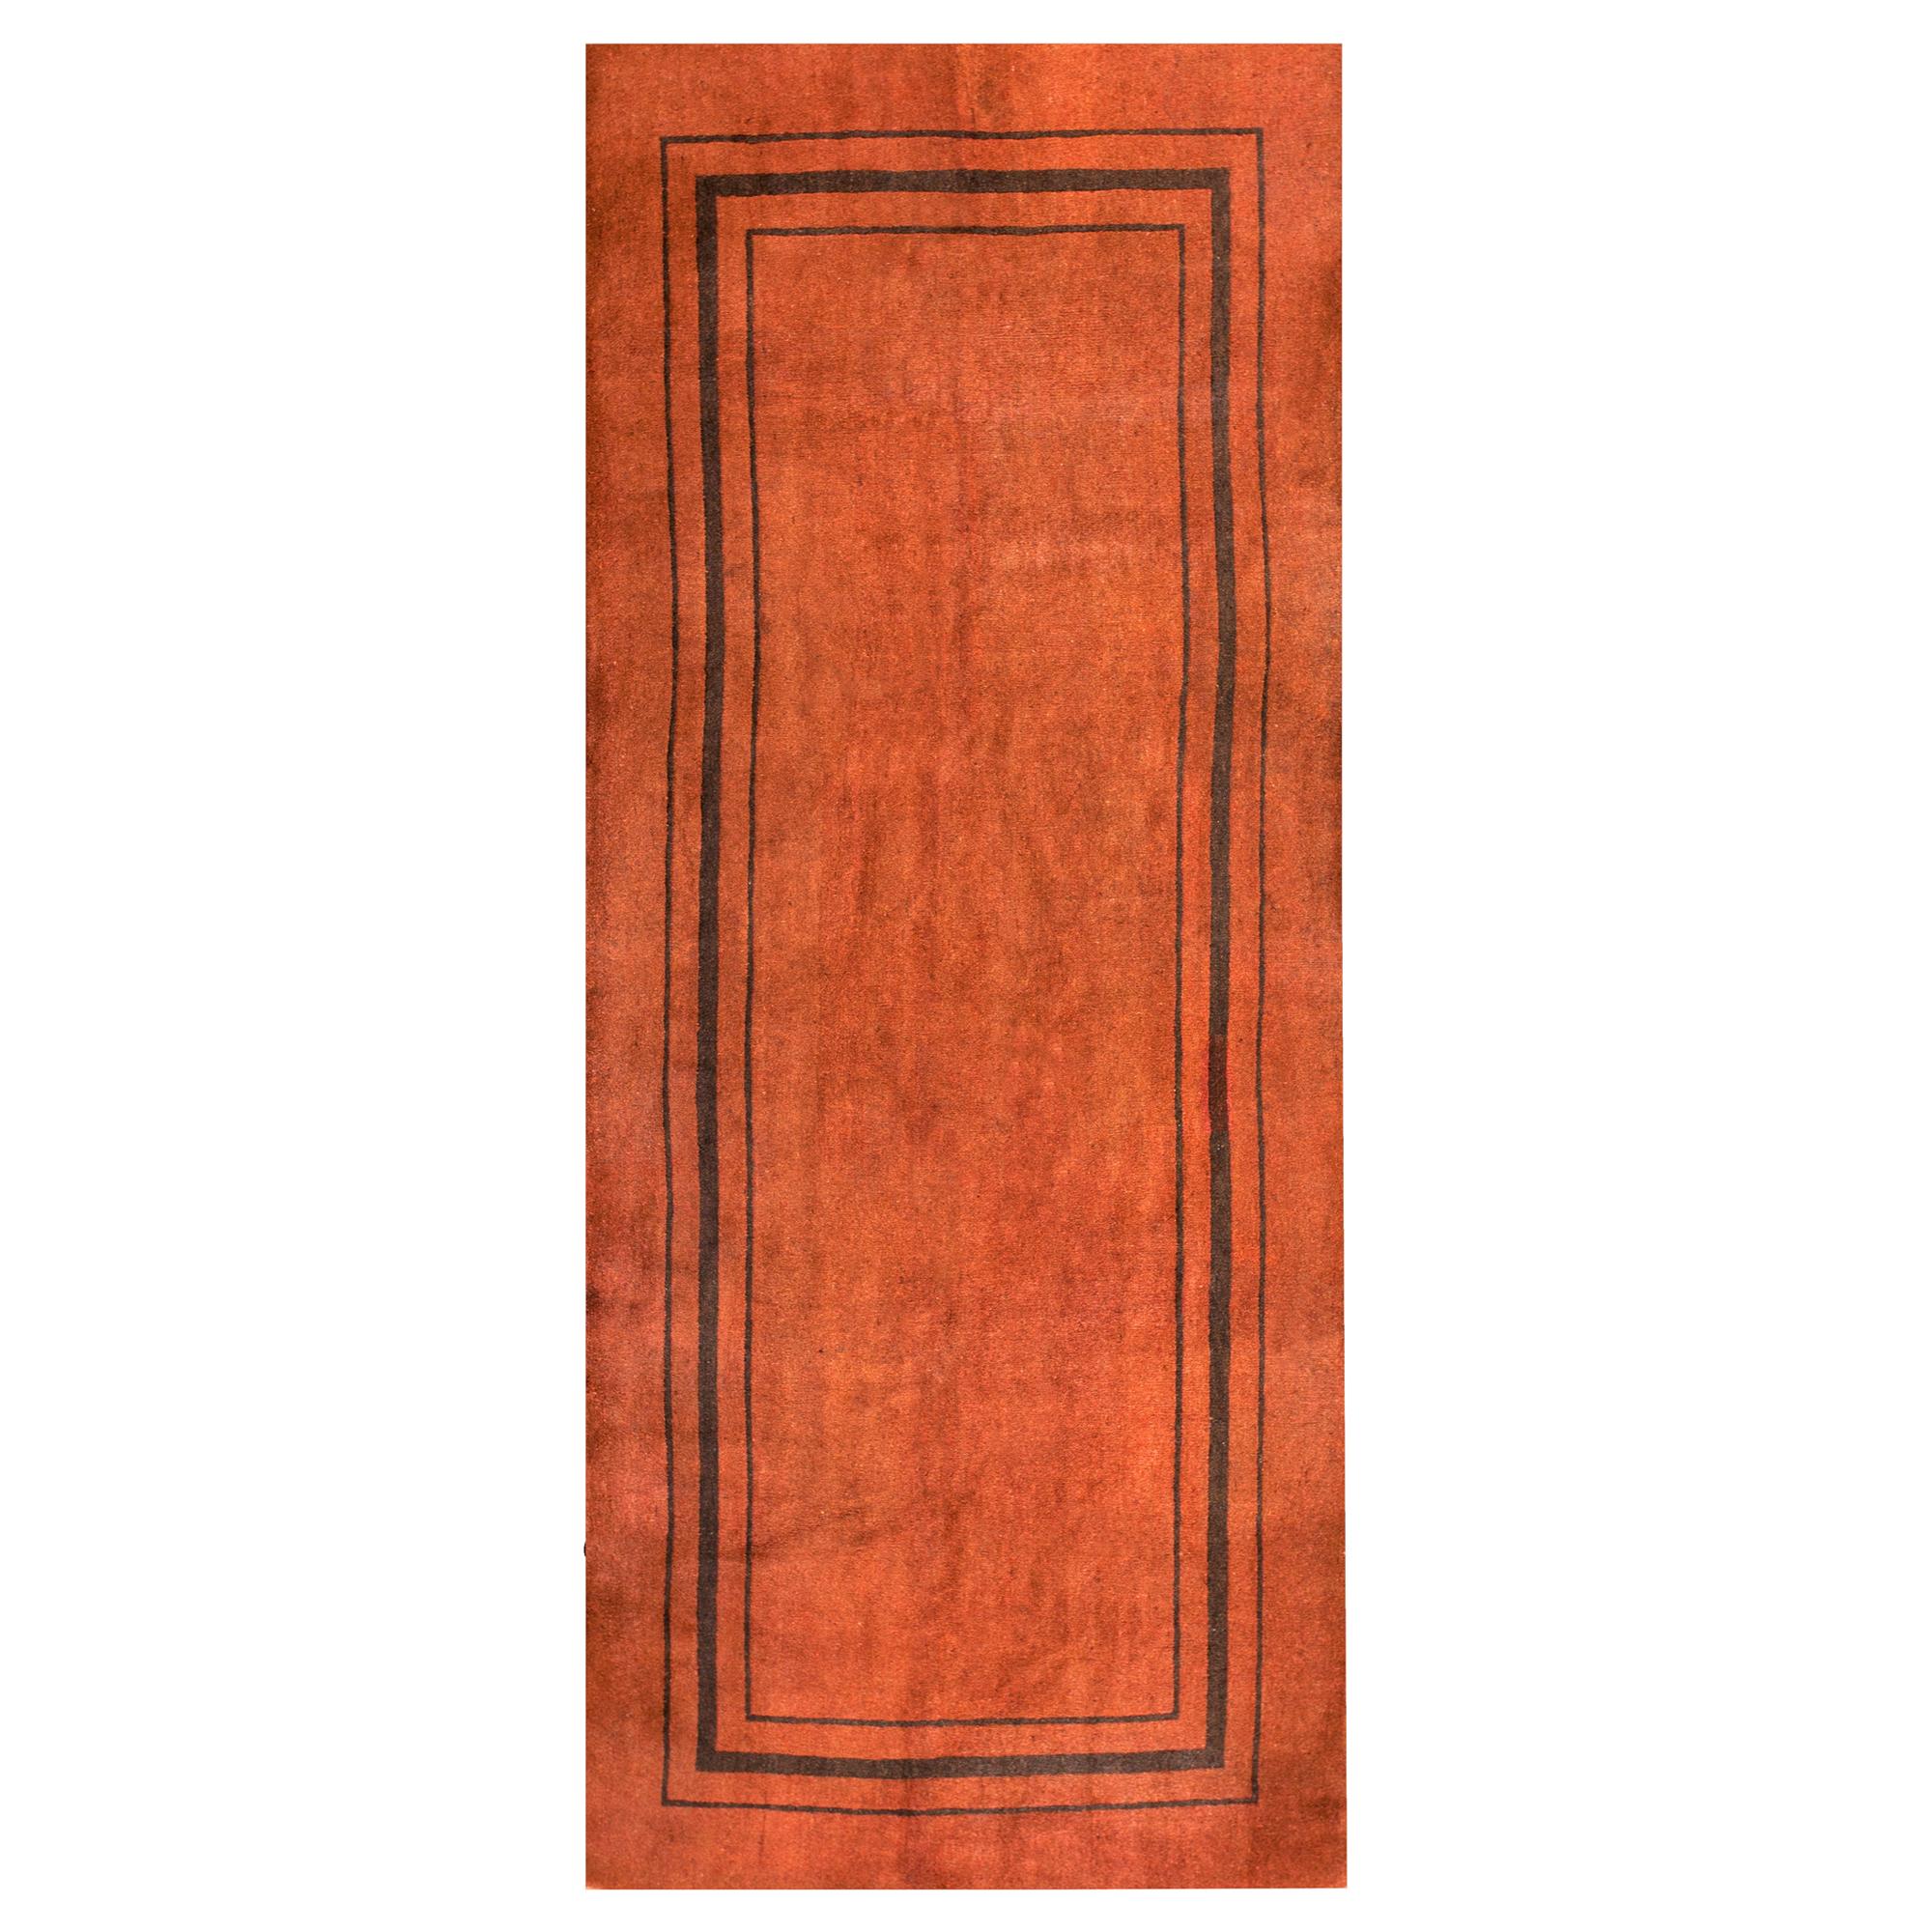 Early 20th Century Chinese Yulin Runner Carpet ( 3'9" x 8'9" - 114 x 267 )